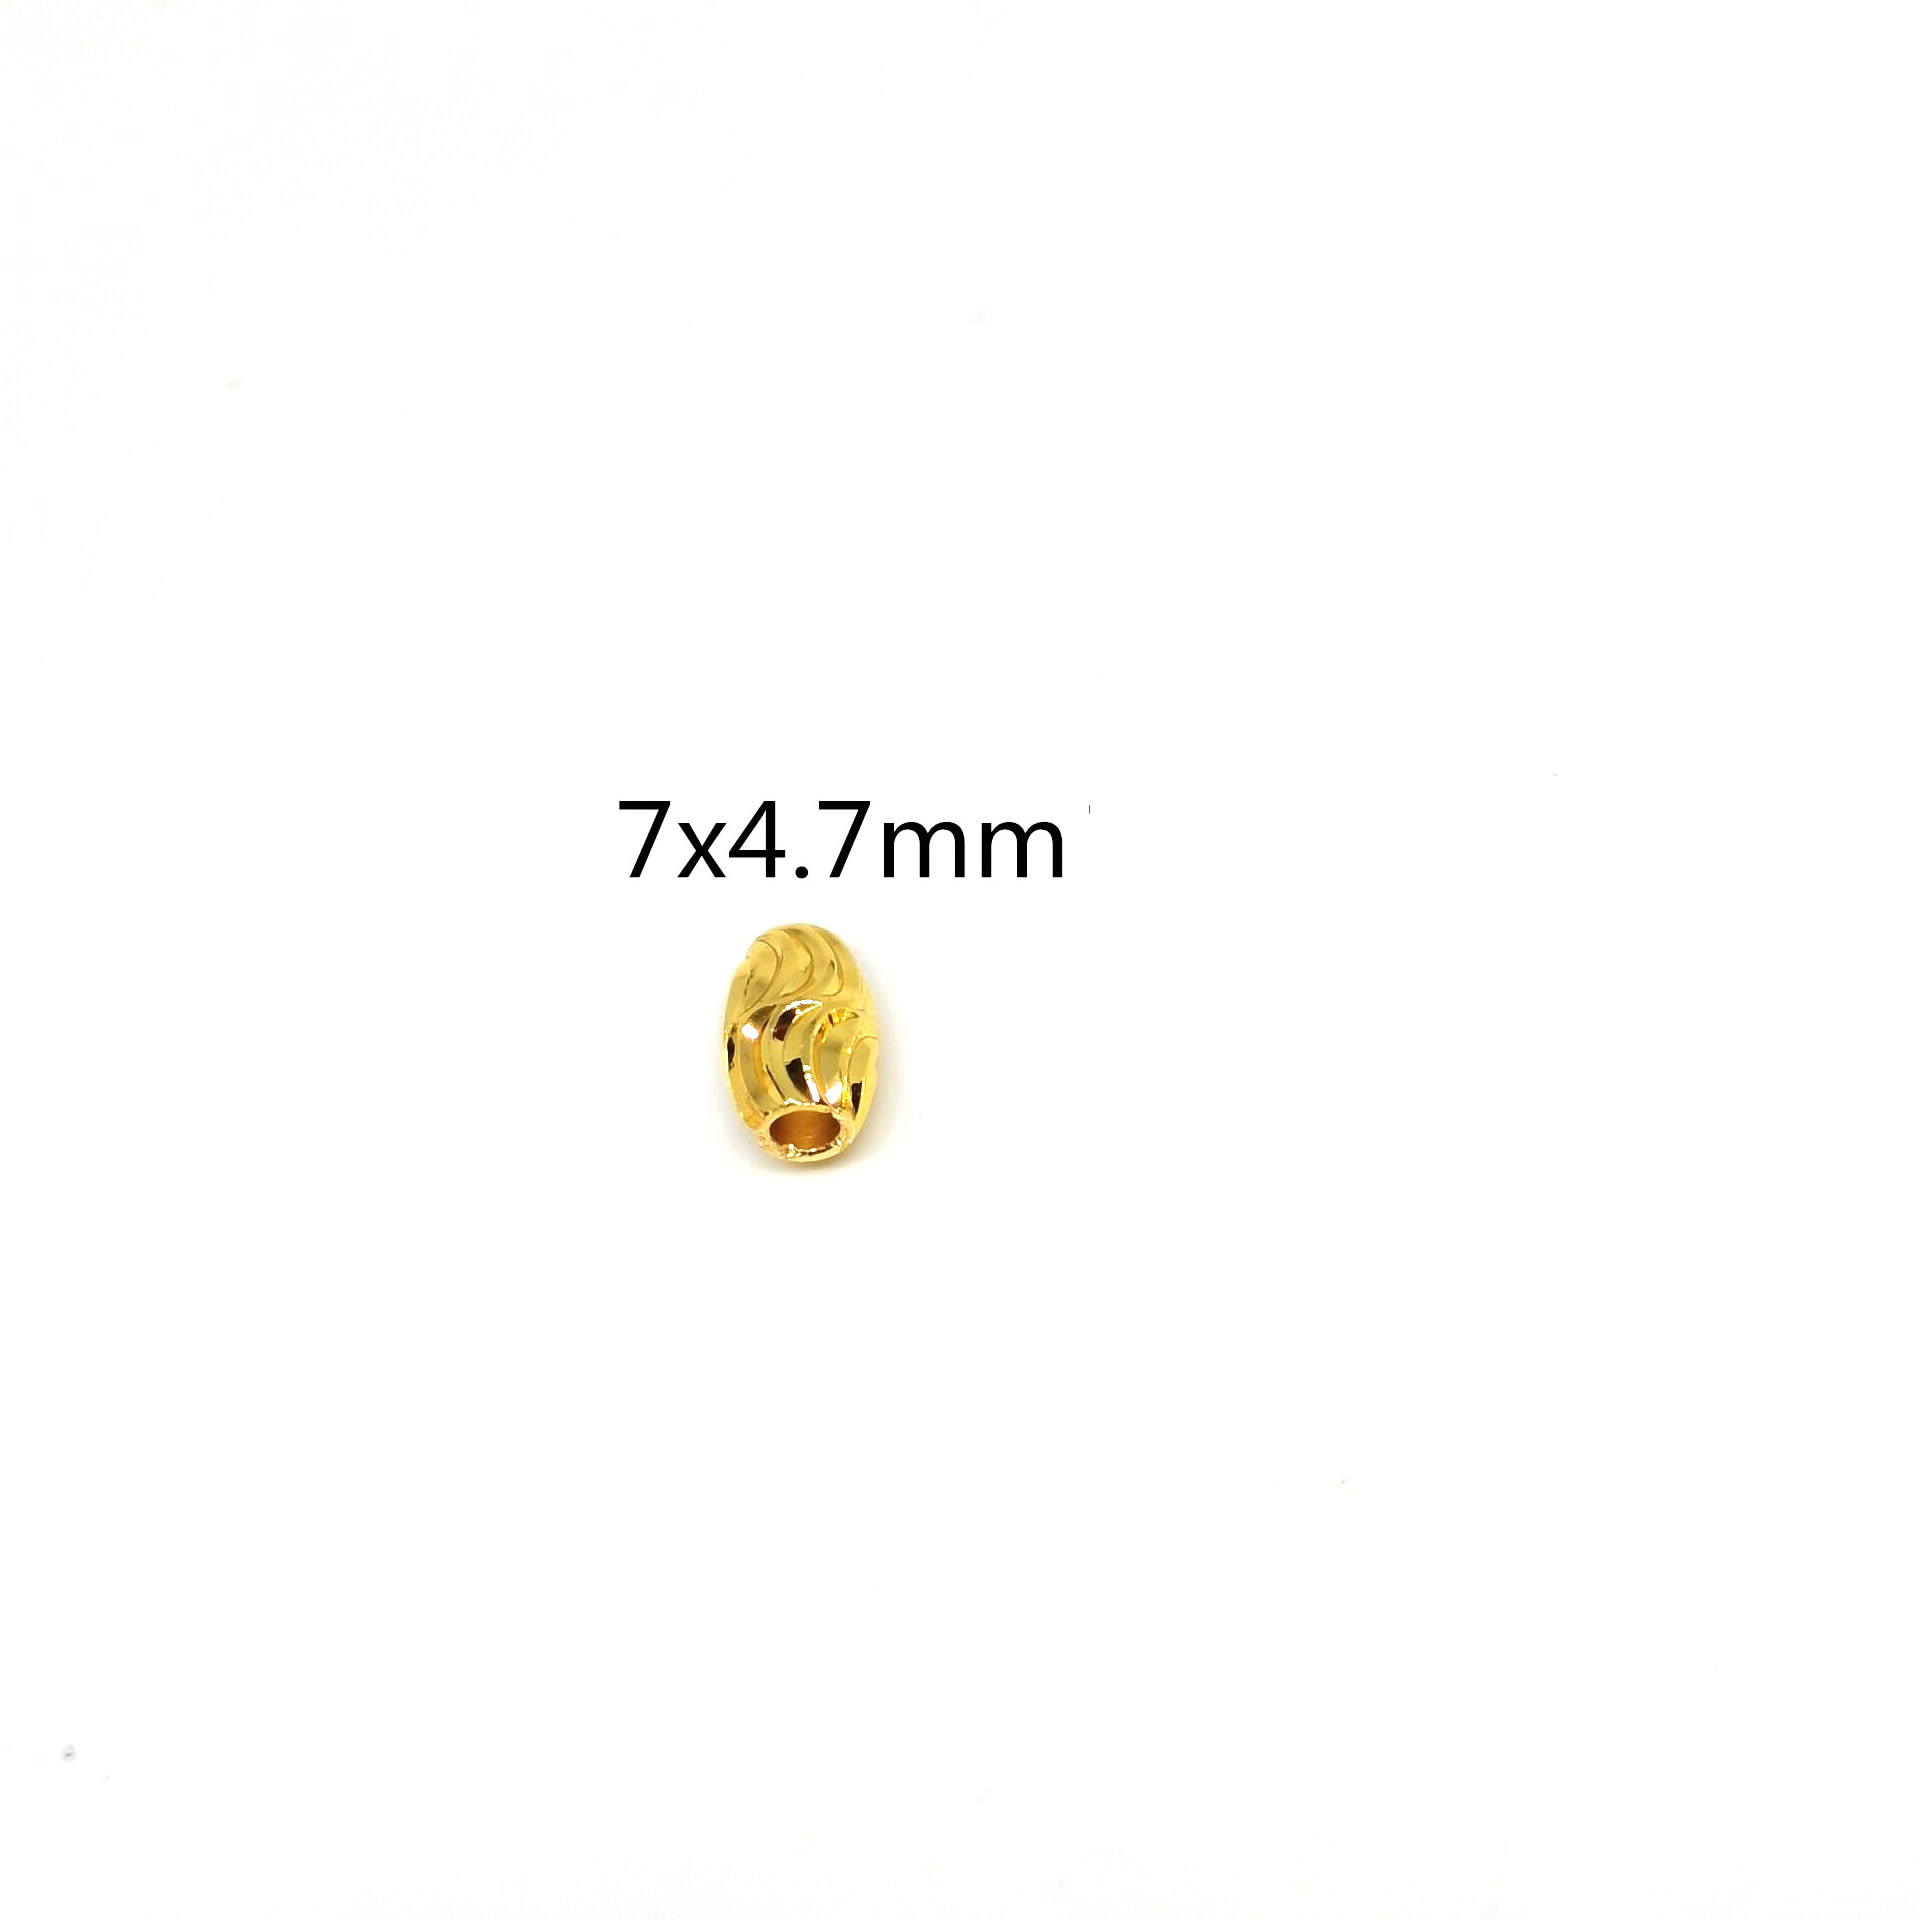 7x4.7mm